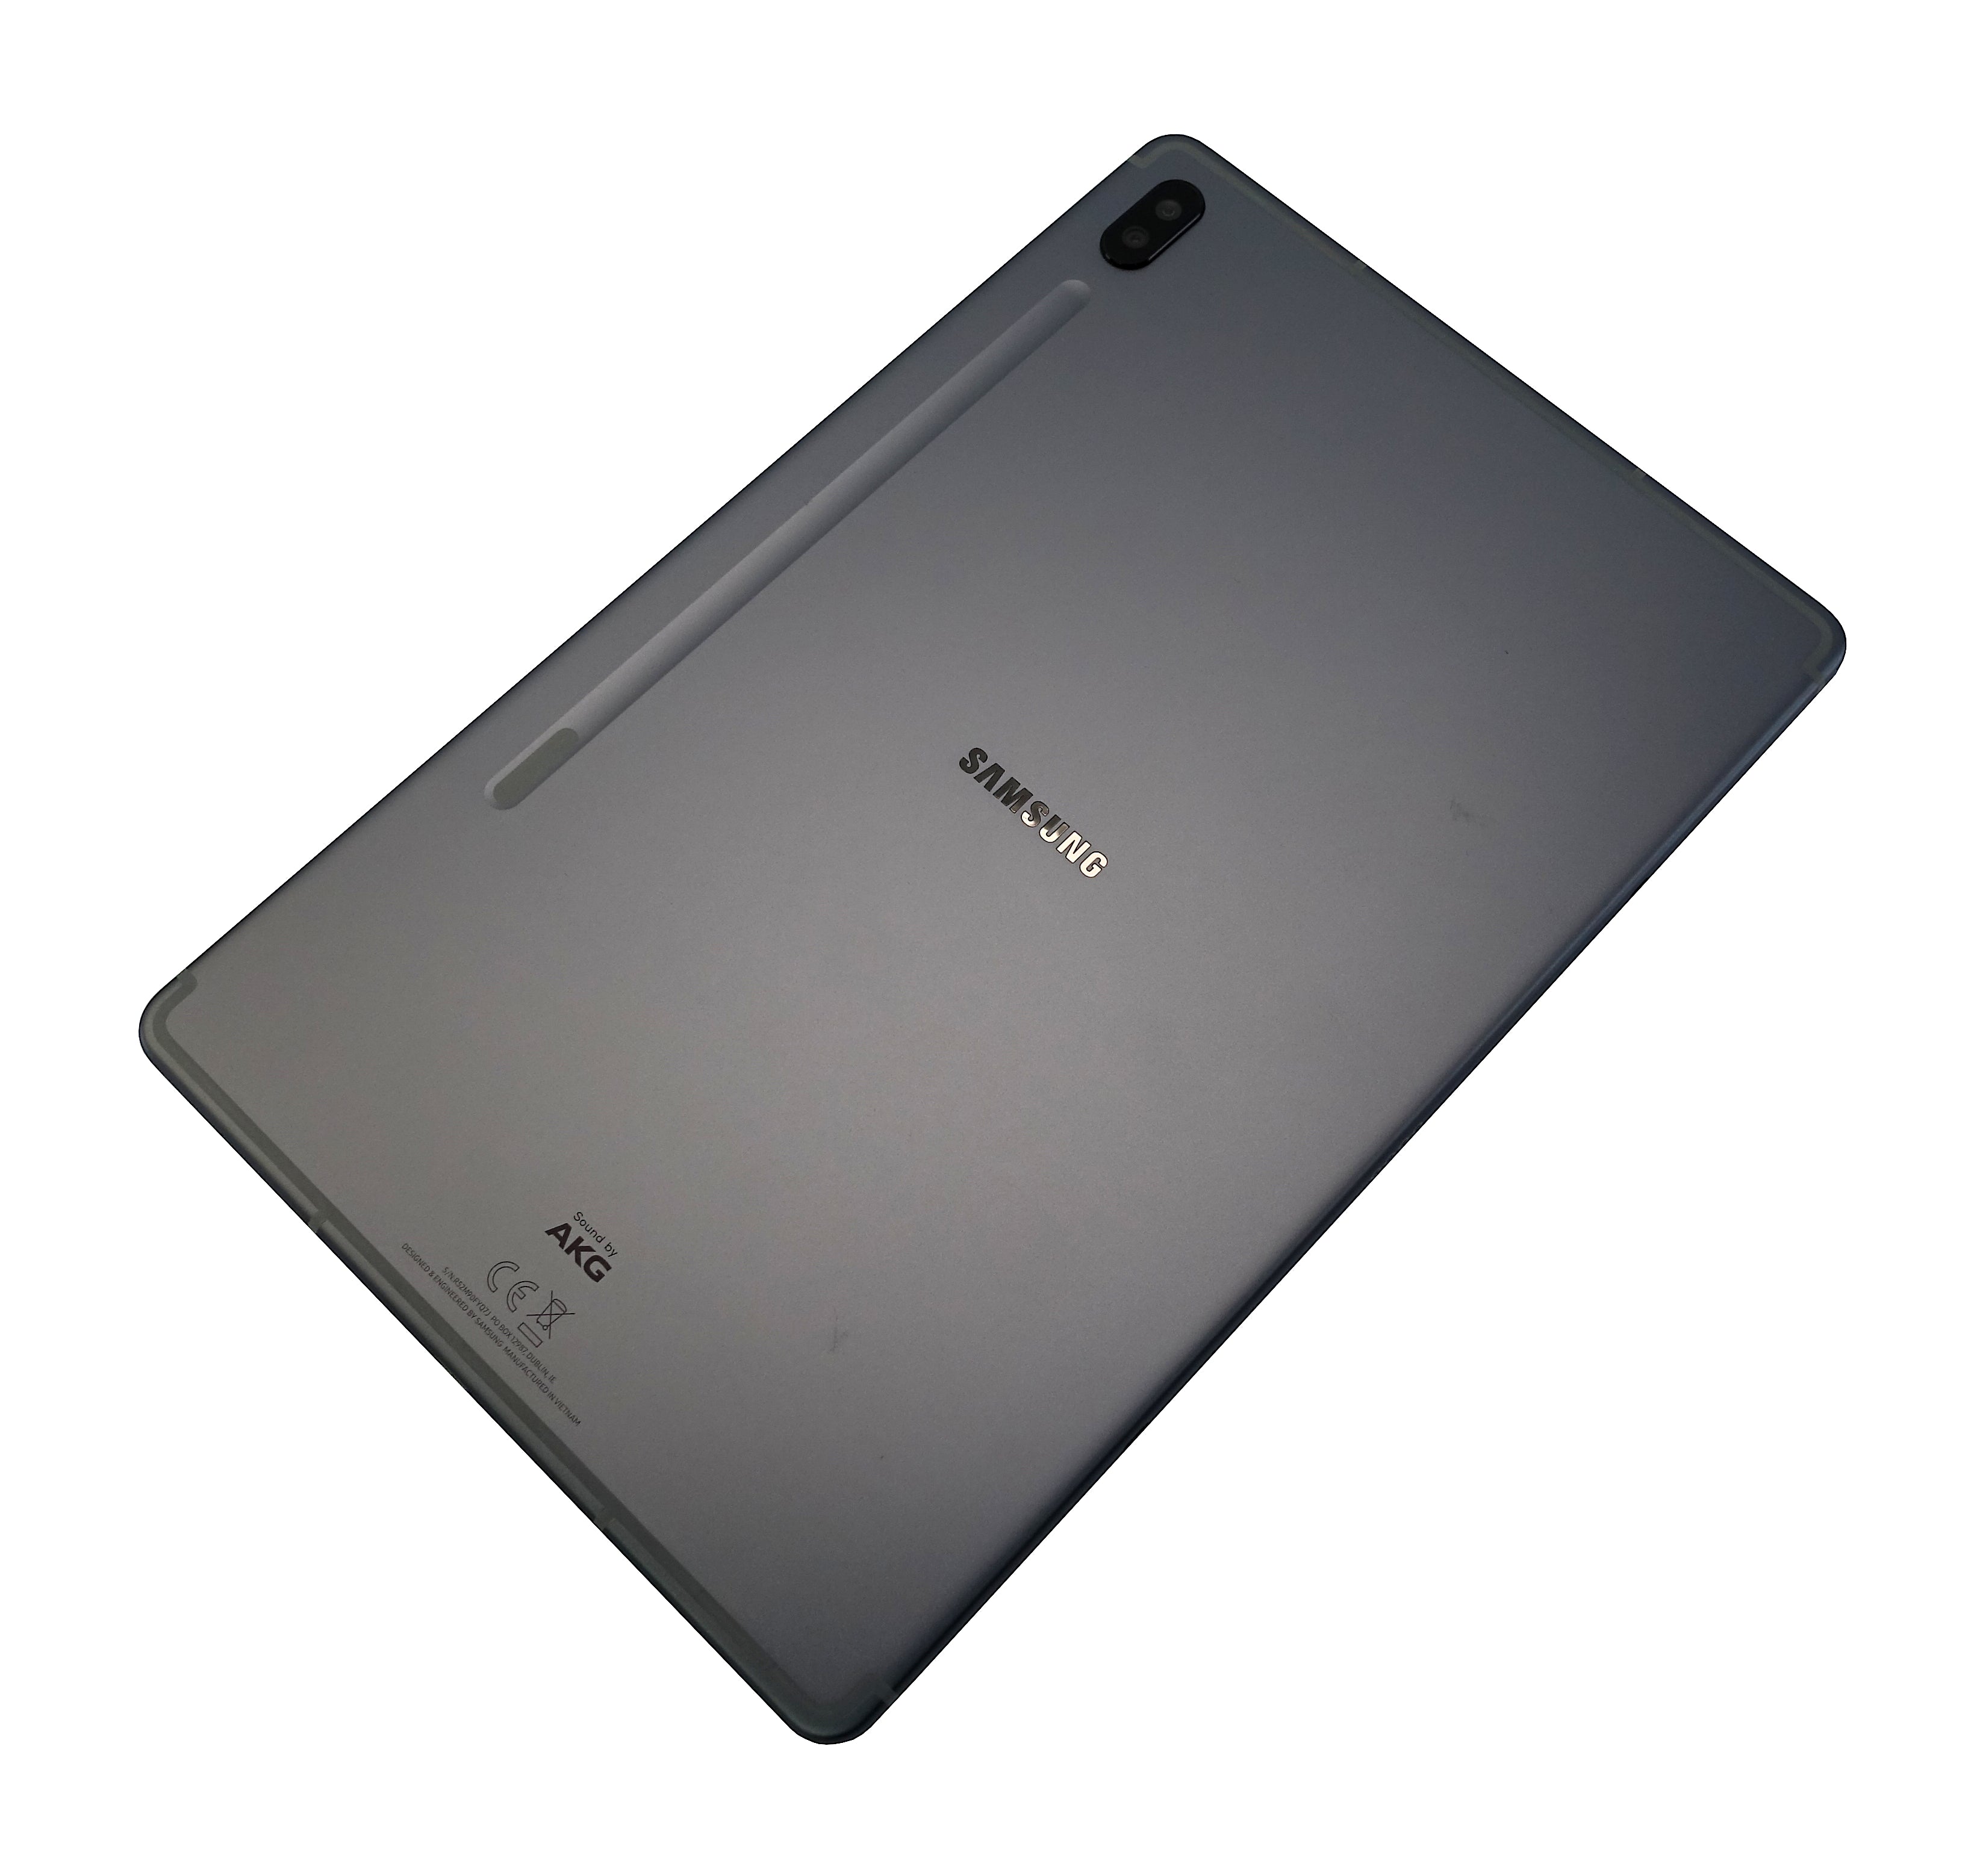 Samsung Galaxy Tab S6 Tablet, 10.5", 128GB, WiFi, Grey, SM-T860